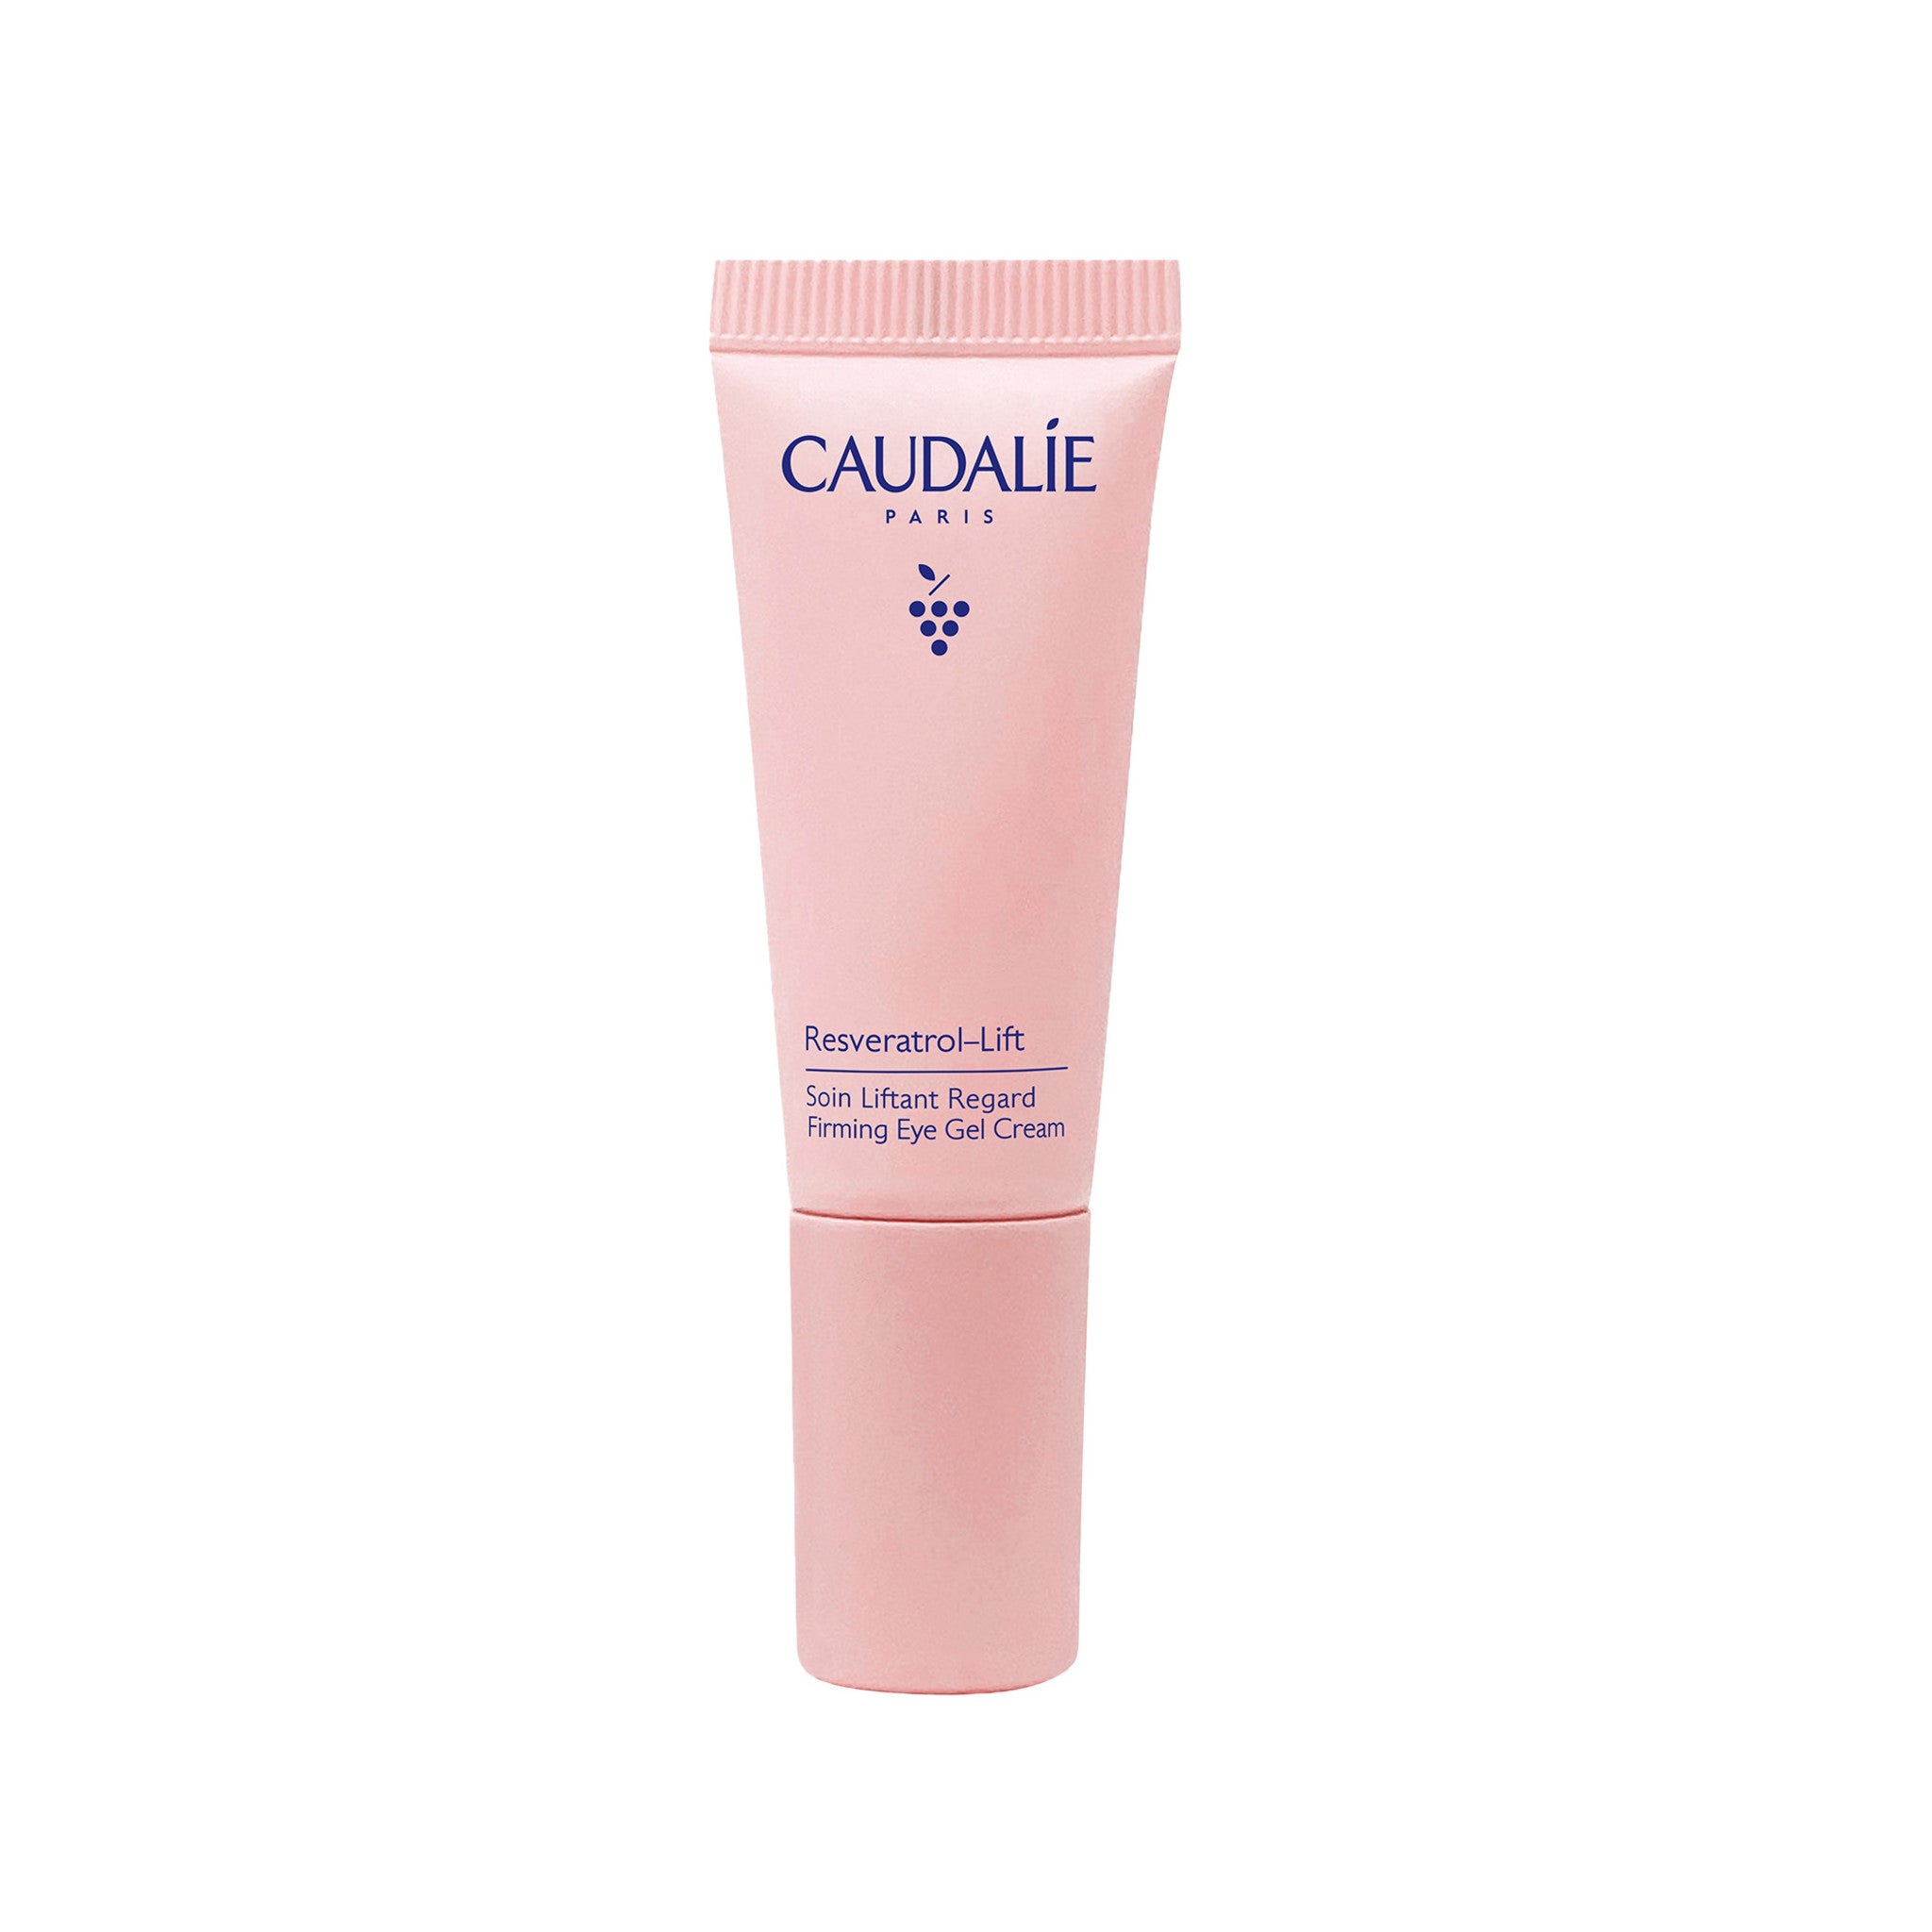 Caudalie Resveratrol-Lift Firming Eye Gel Cream main image.